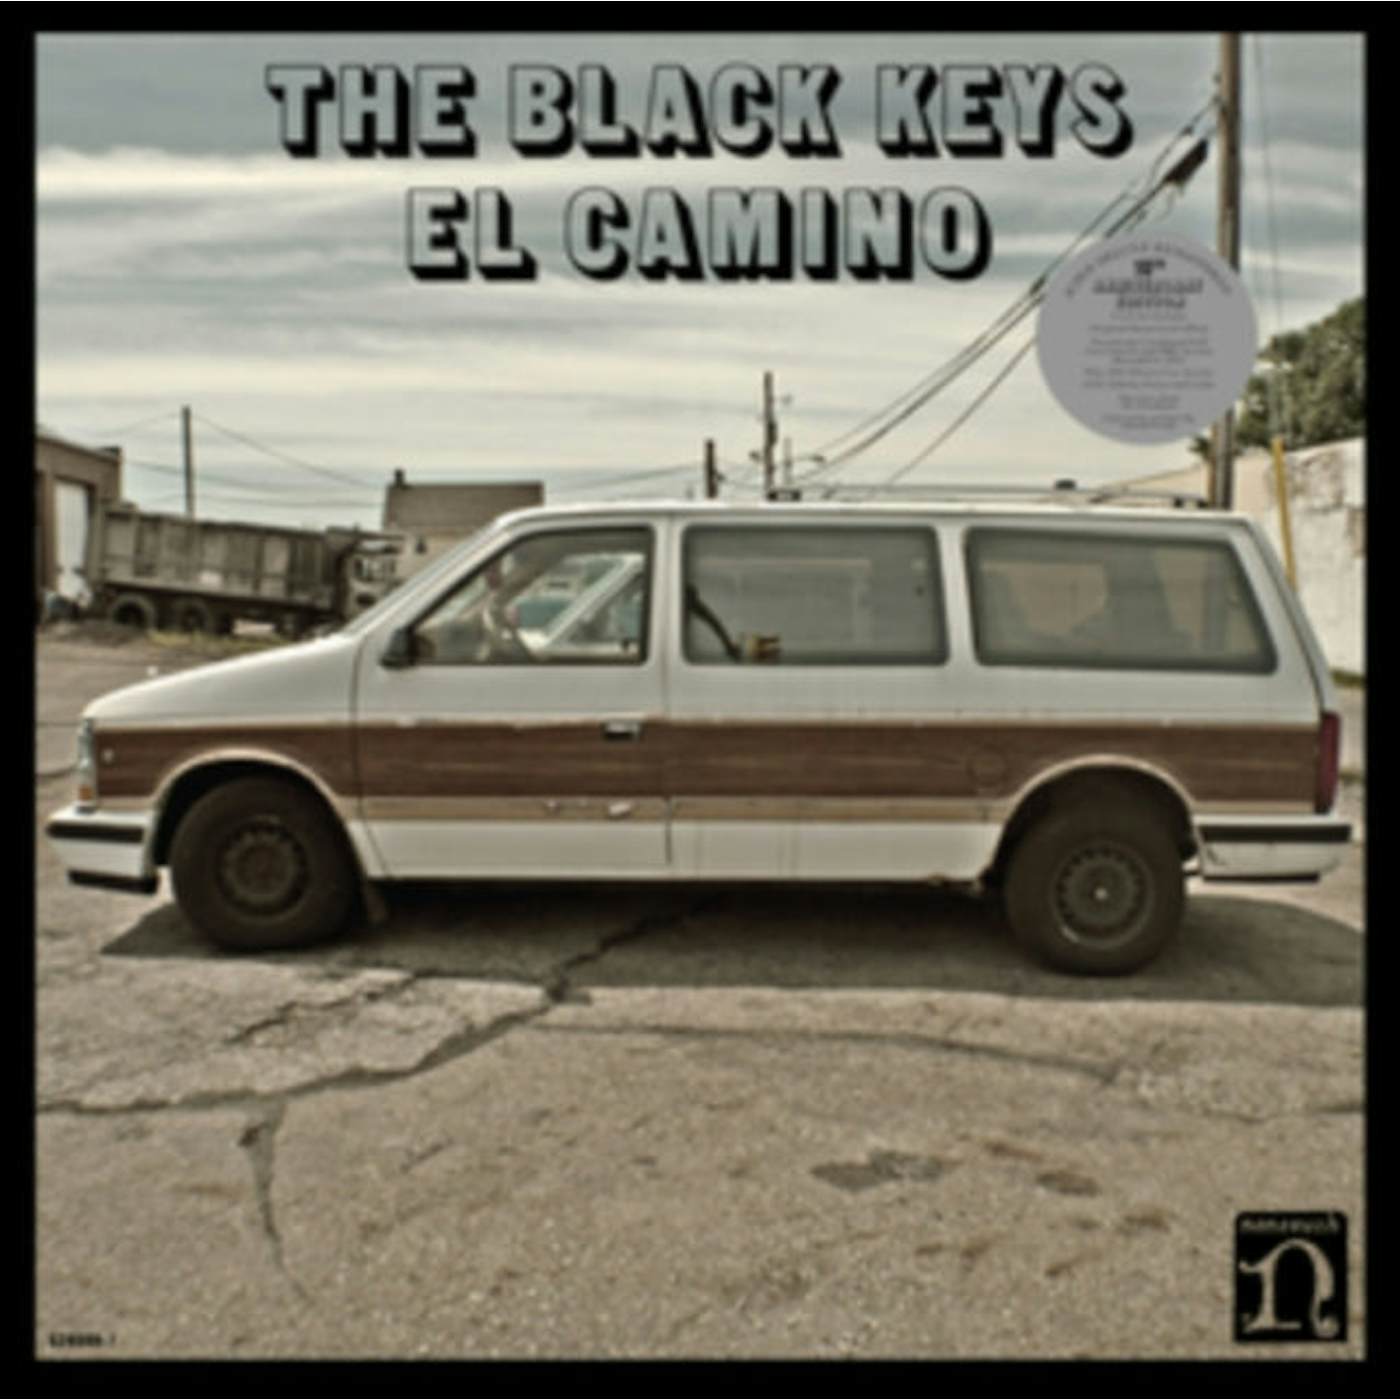 The Black Keys LP Vinyl Record - El Camino (10 th Anniversary Super Deluxe Edition)